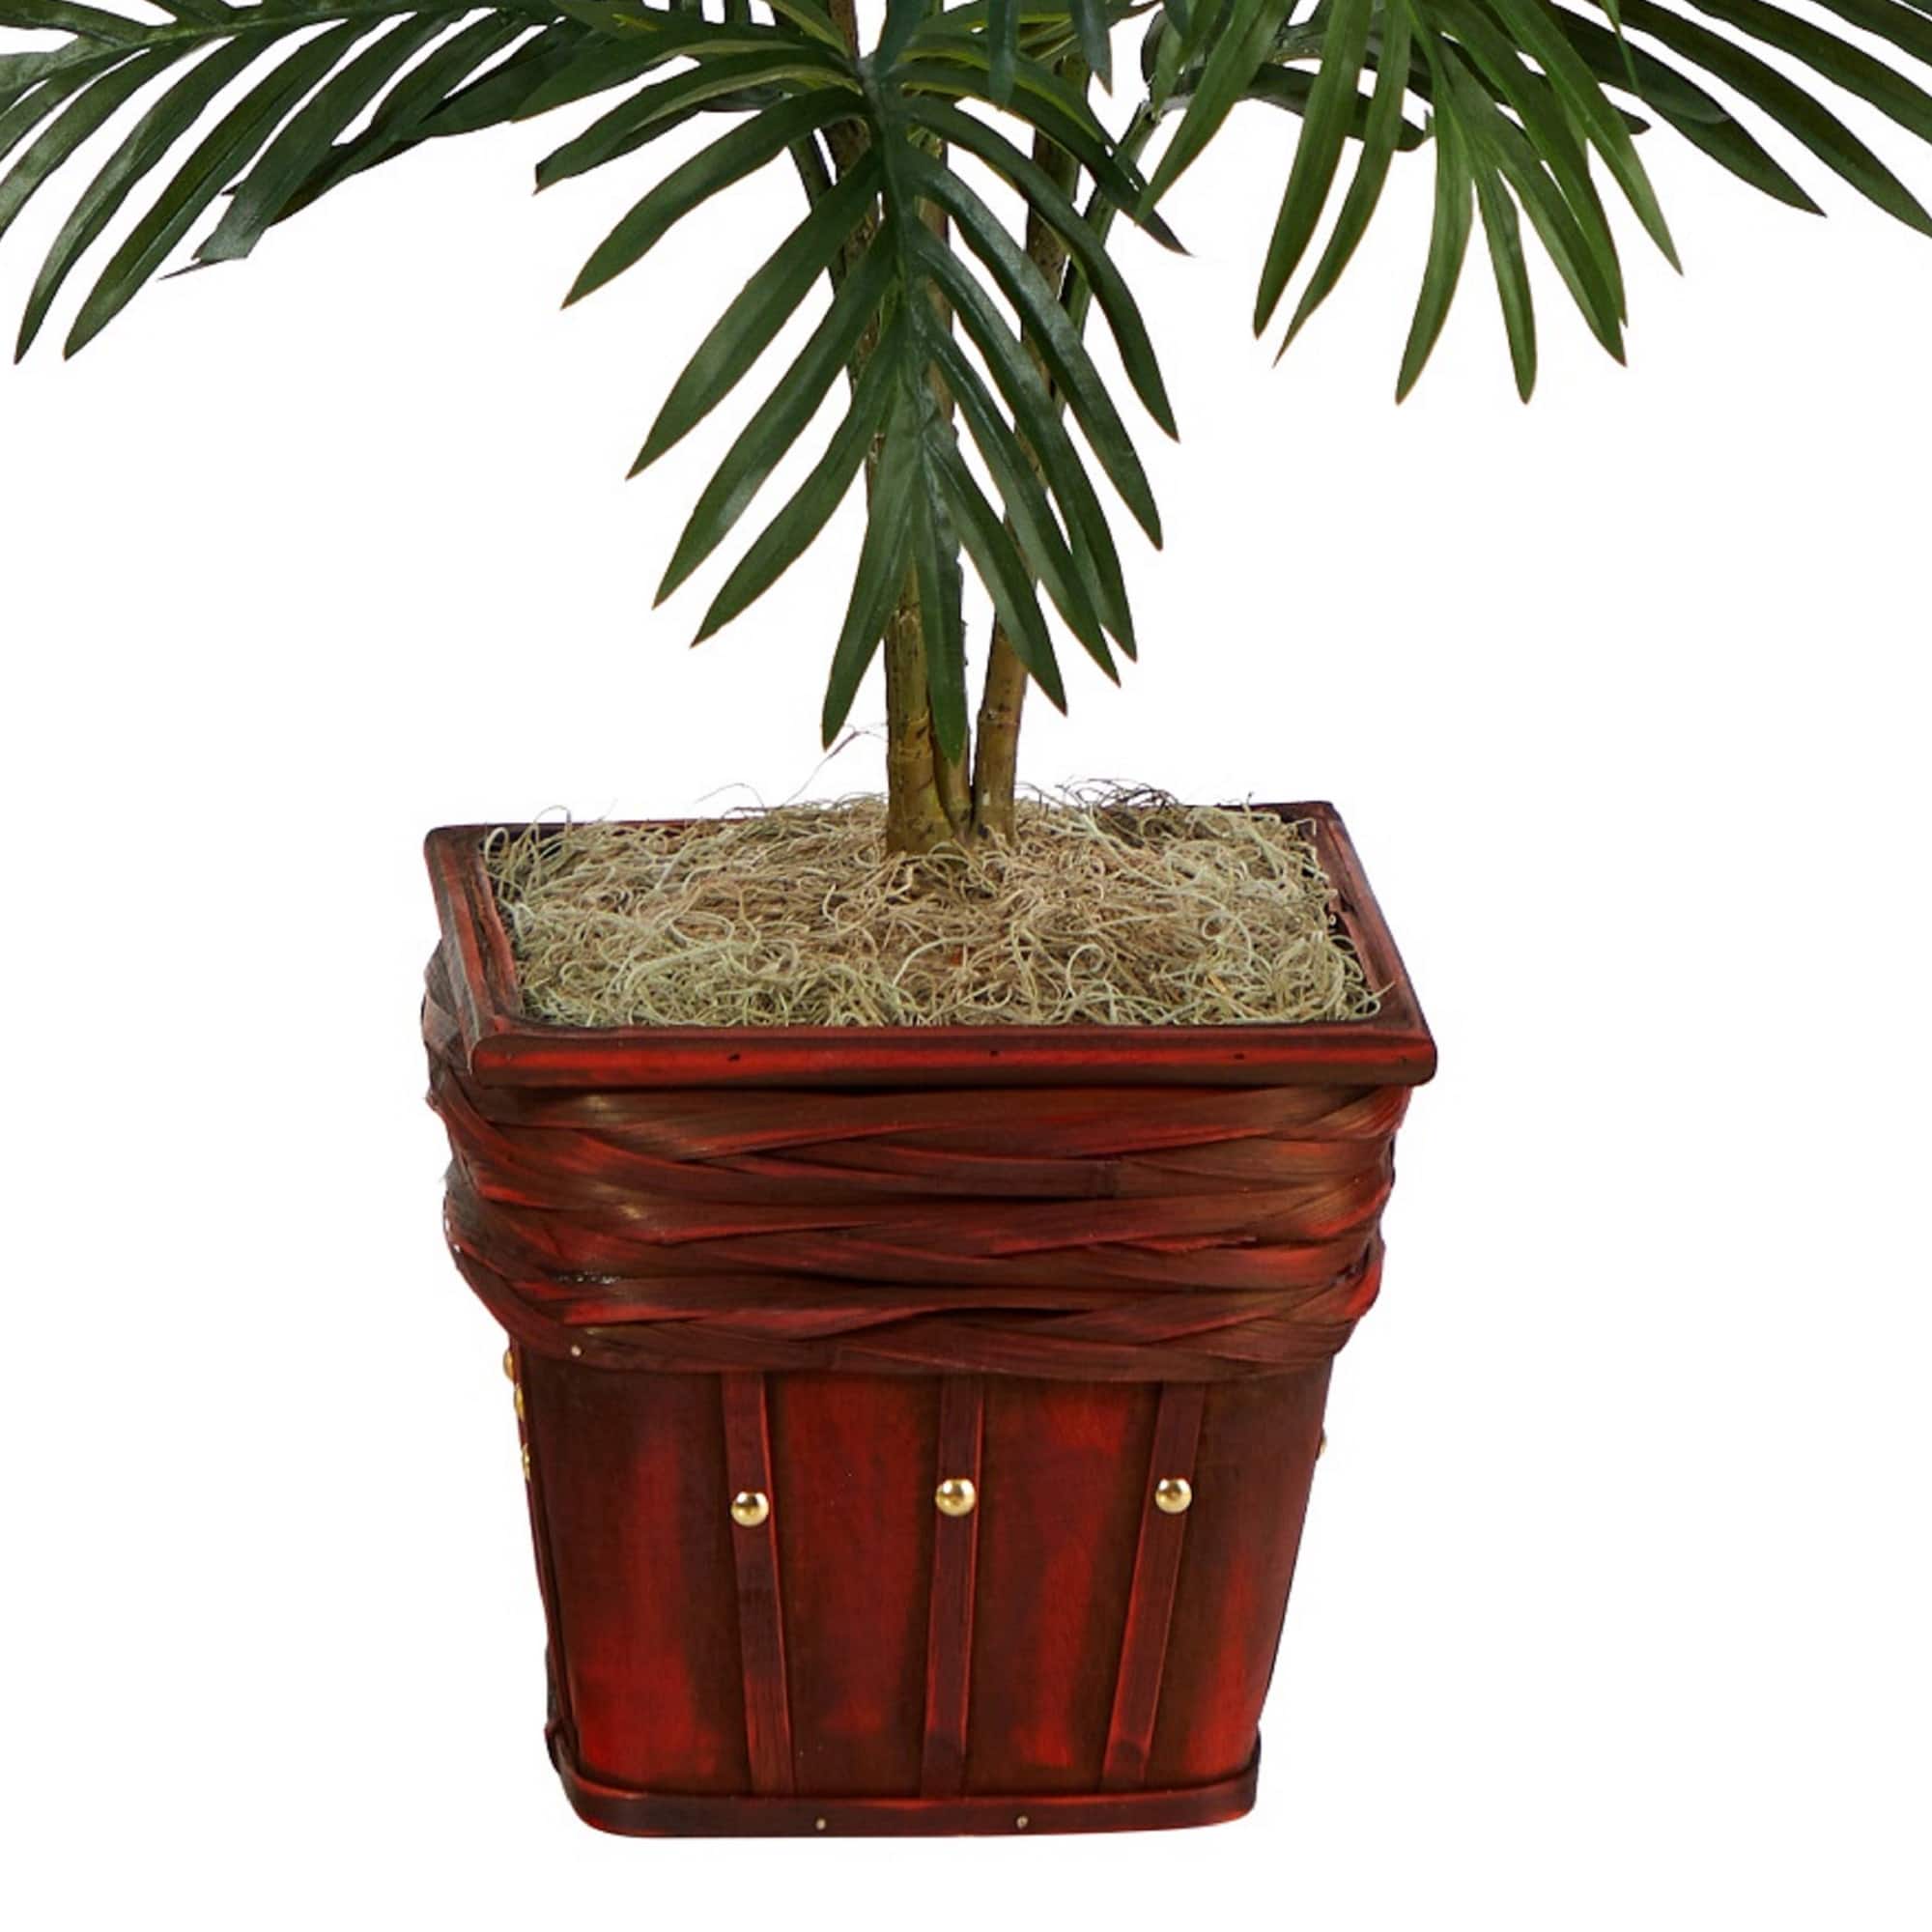 3.16ft. Areca Palm with Wicker Basket Planter